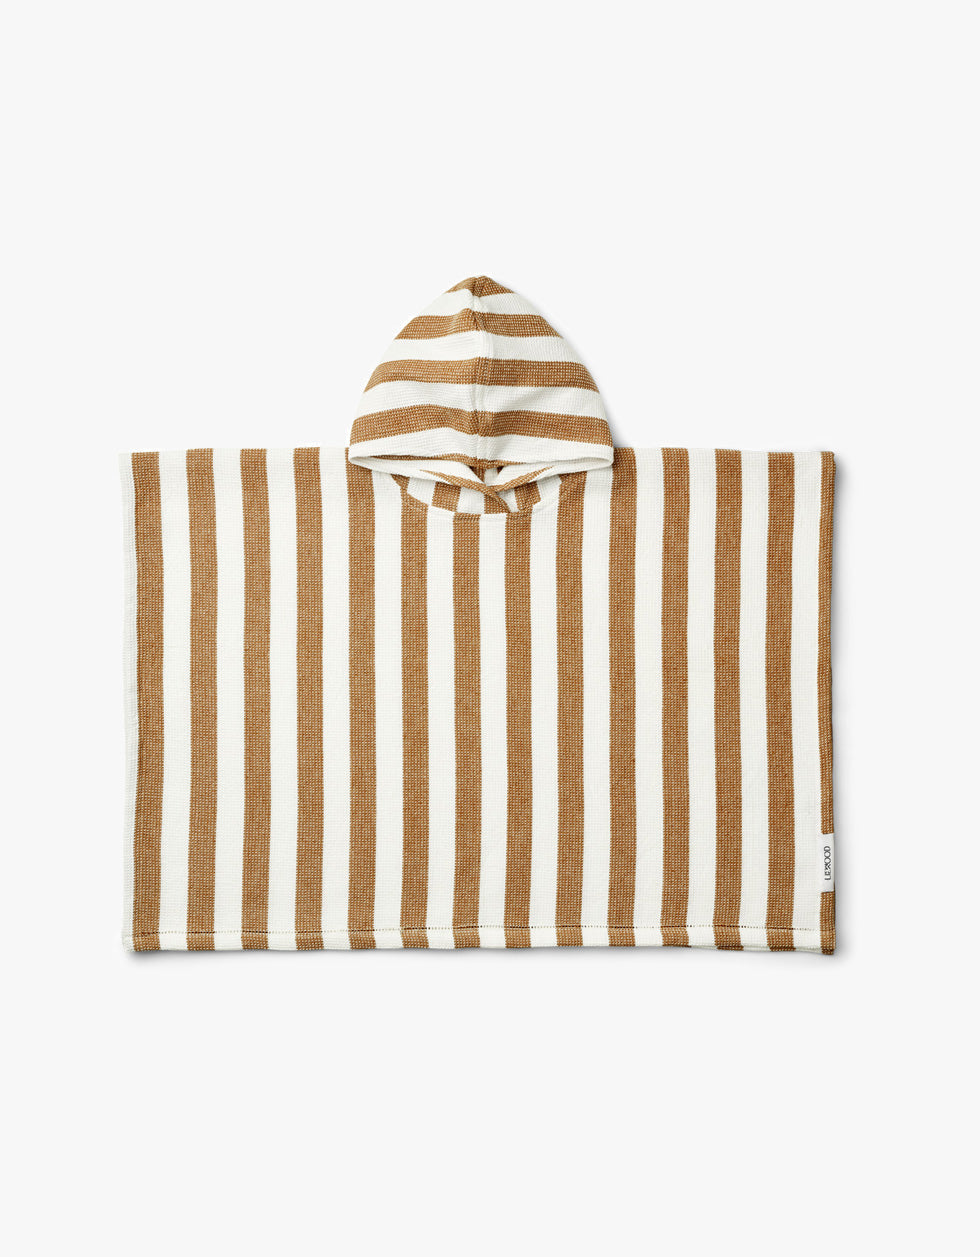 Paco Poncho - Y/D stripe: Golden Caramel/White